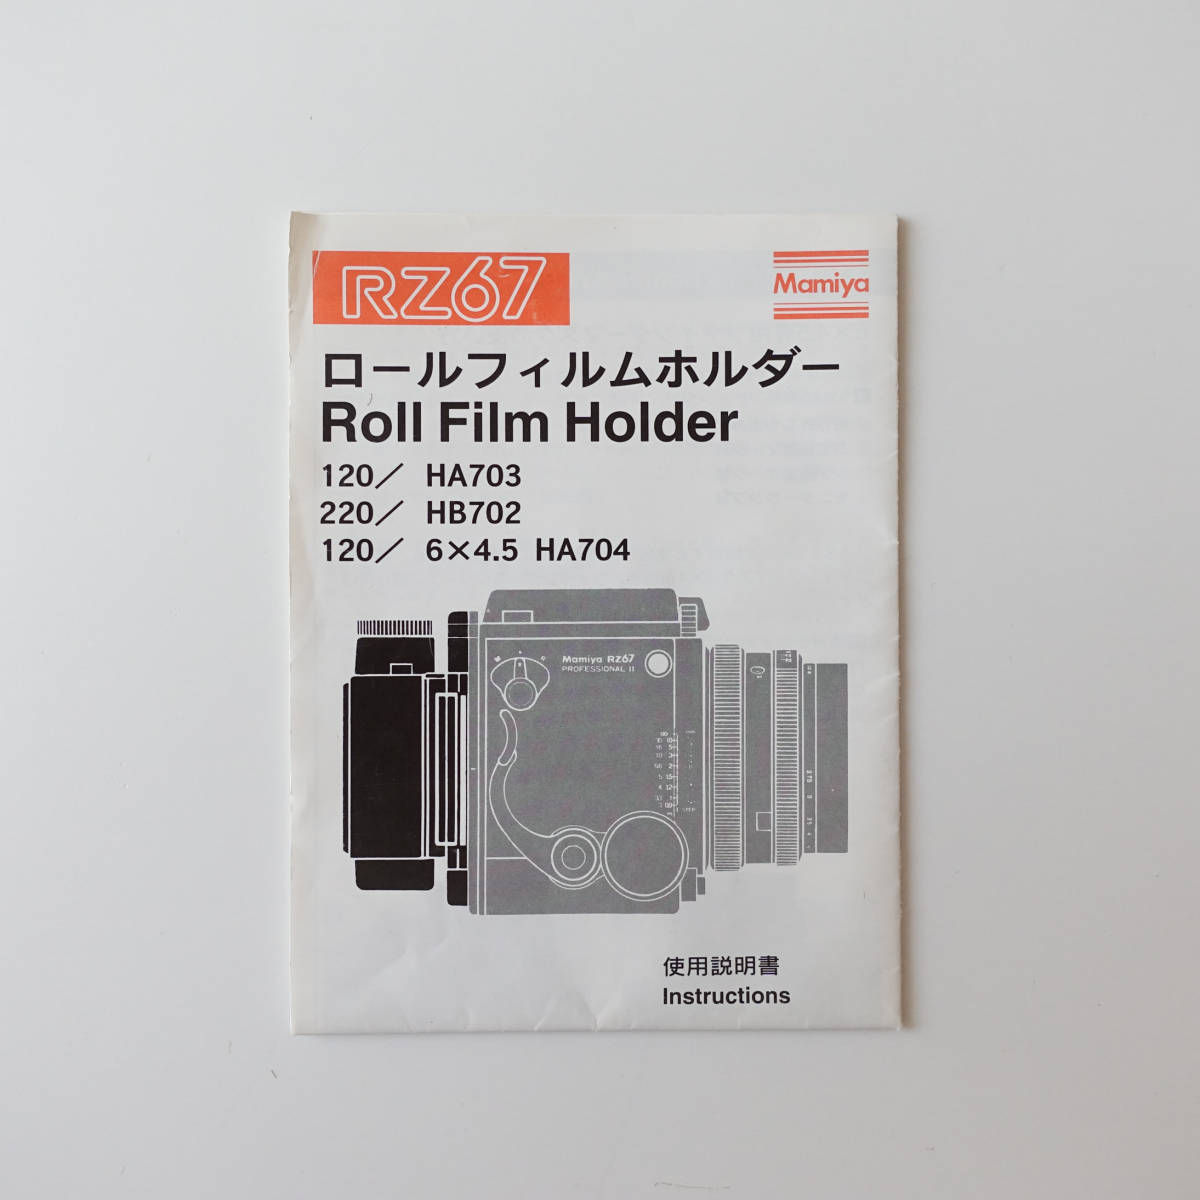 Mamiya マミヤ RZ67 ロールフィルムホルダー Roll Film Holder 使用説明書＋保証書 / 120 HA703 / 220 HB702 / 英語 日本語 市橋織江